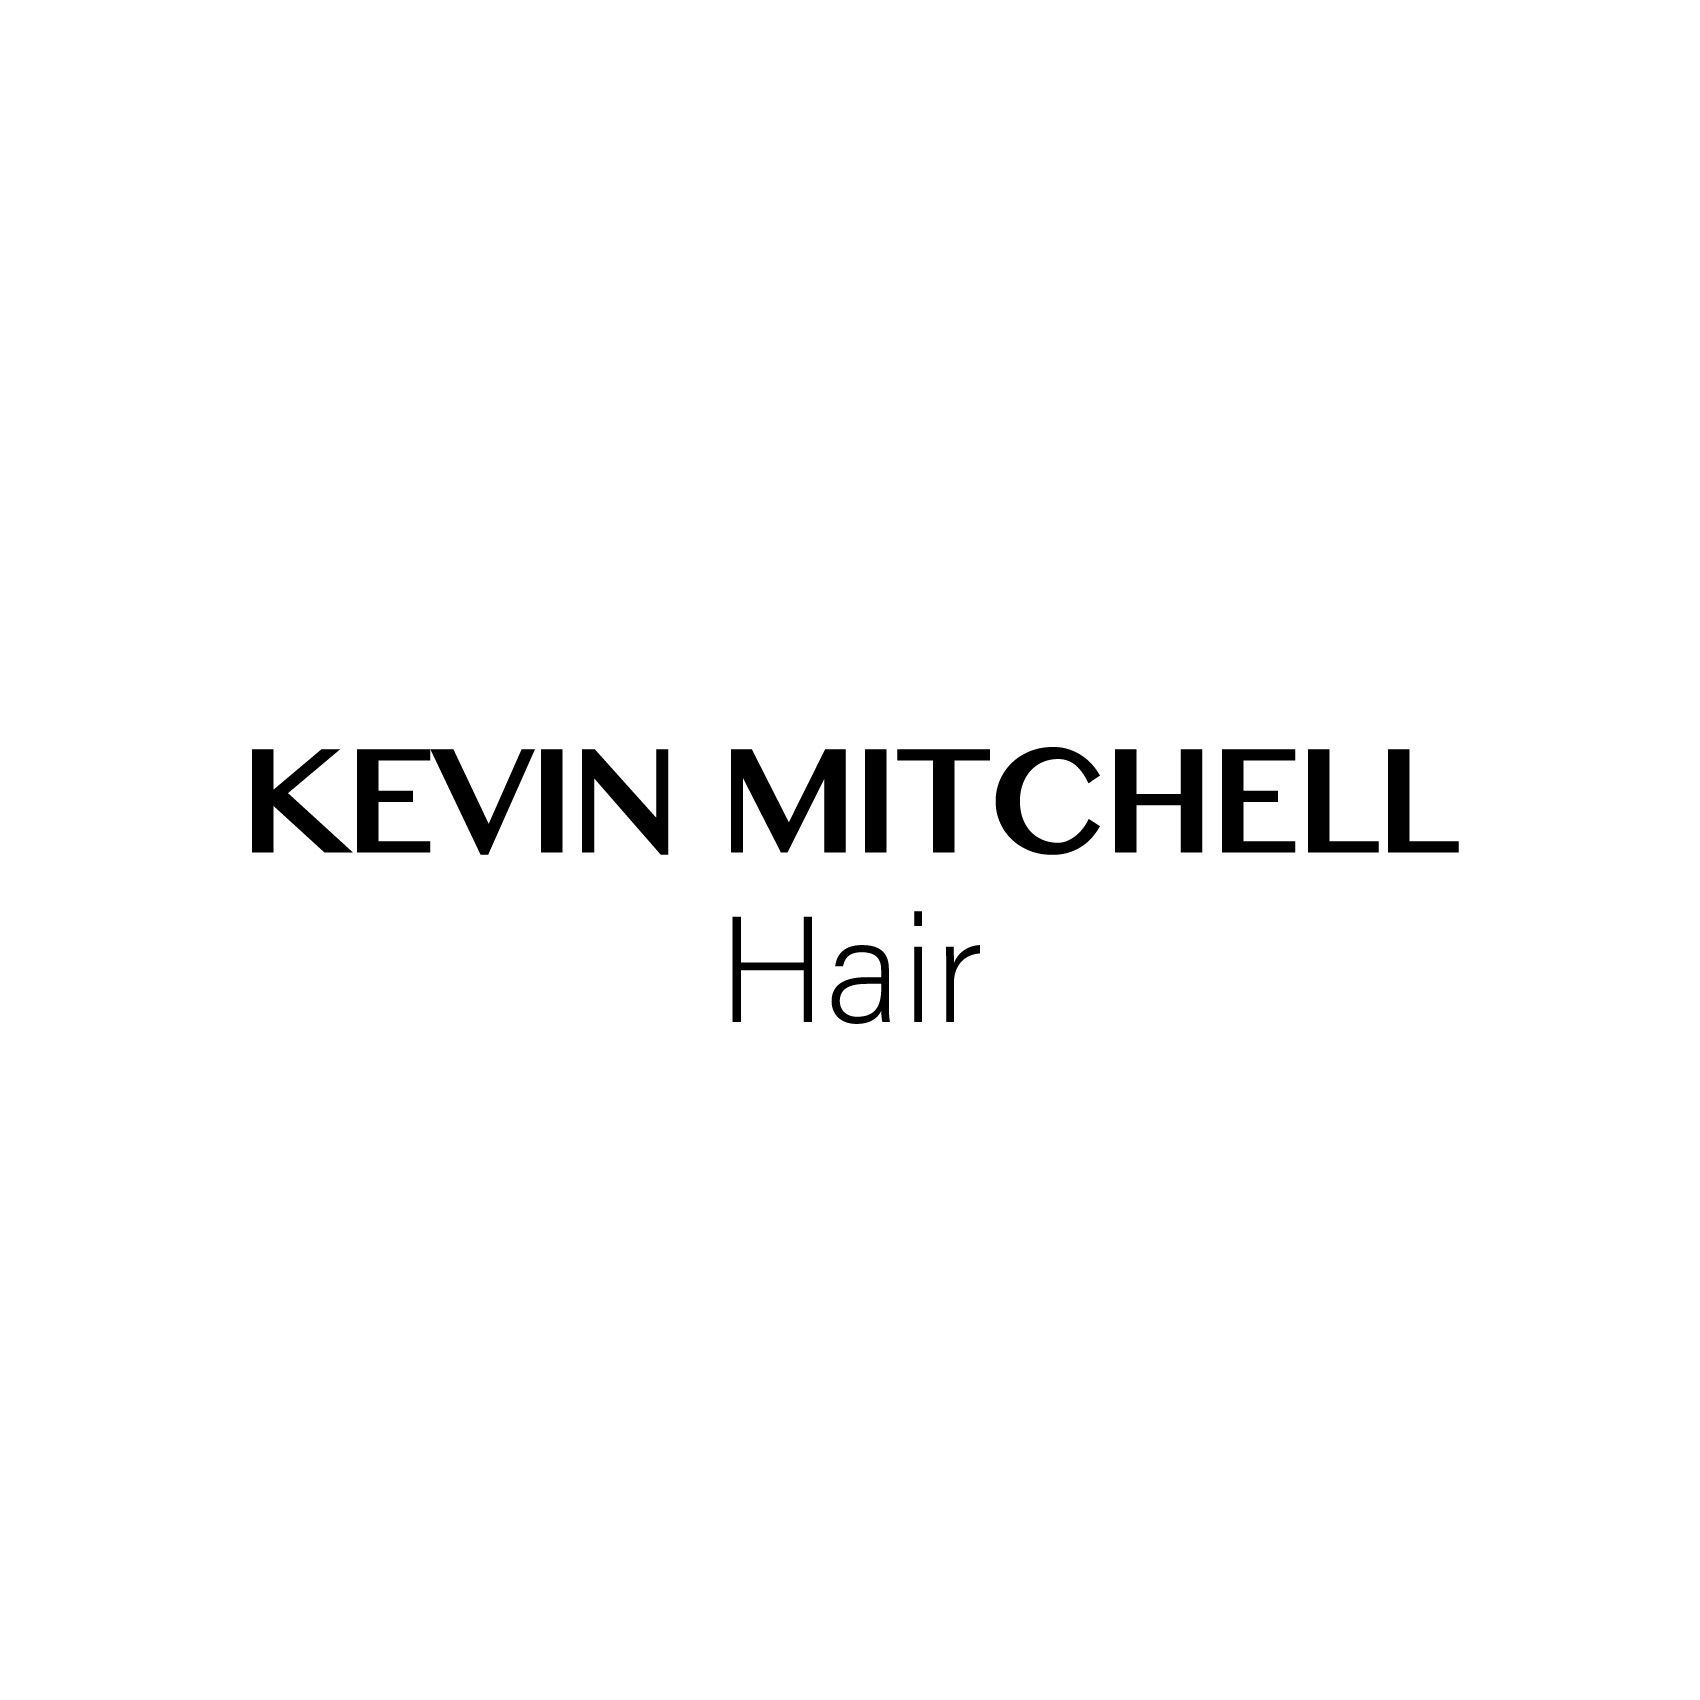 Kevin Mitchell Hair, 38 Spear Street, Manchester